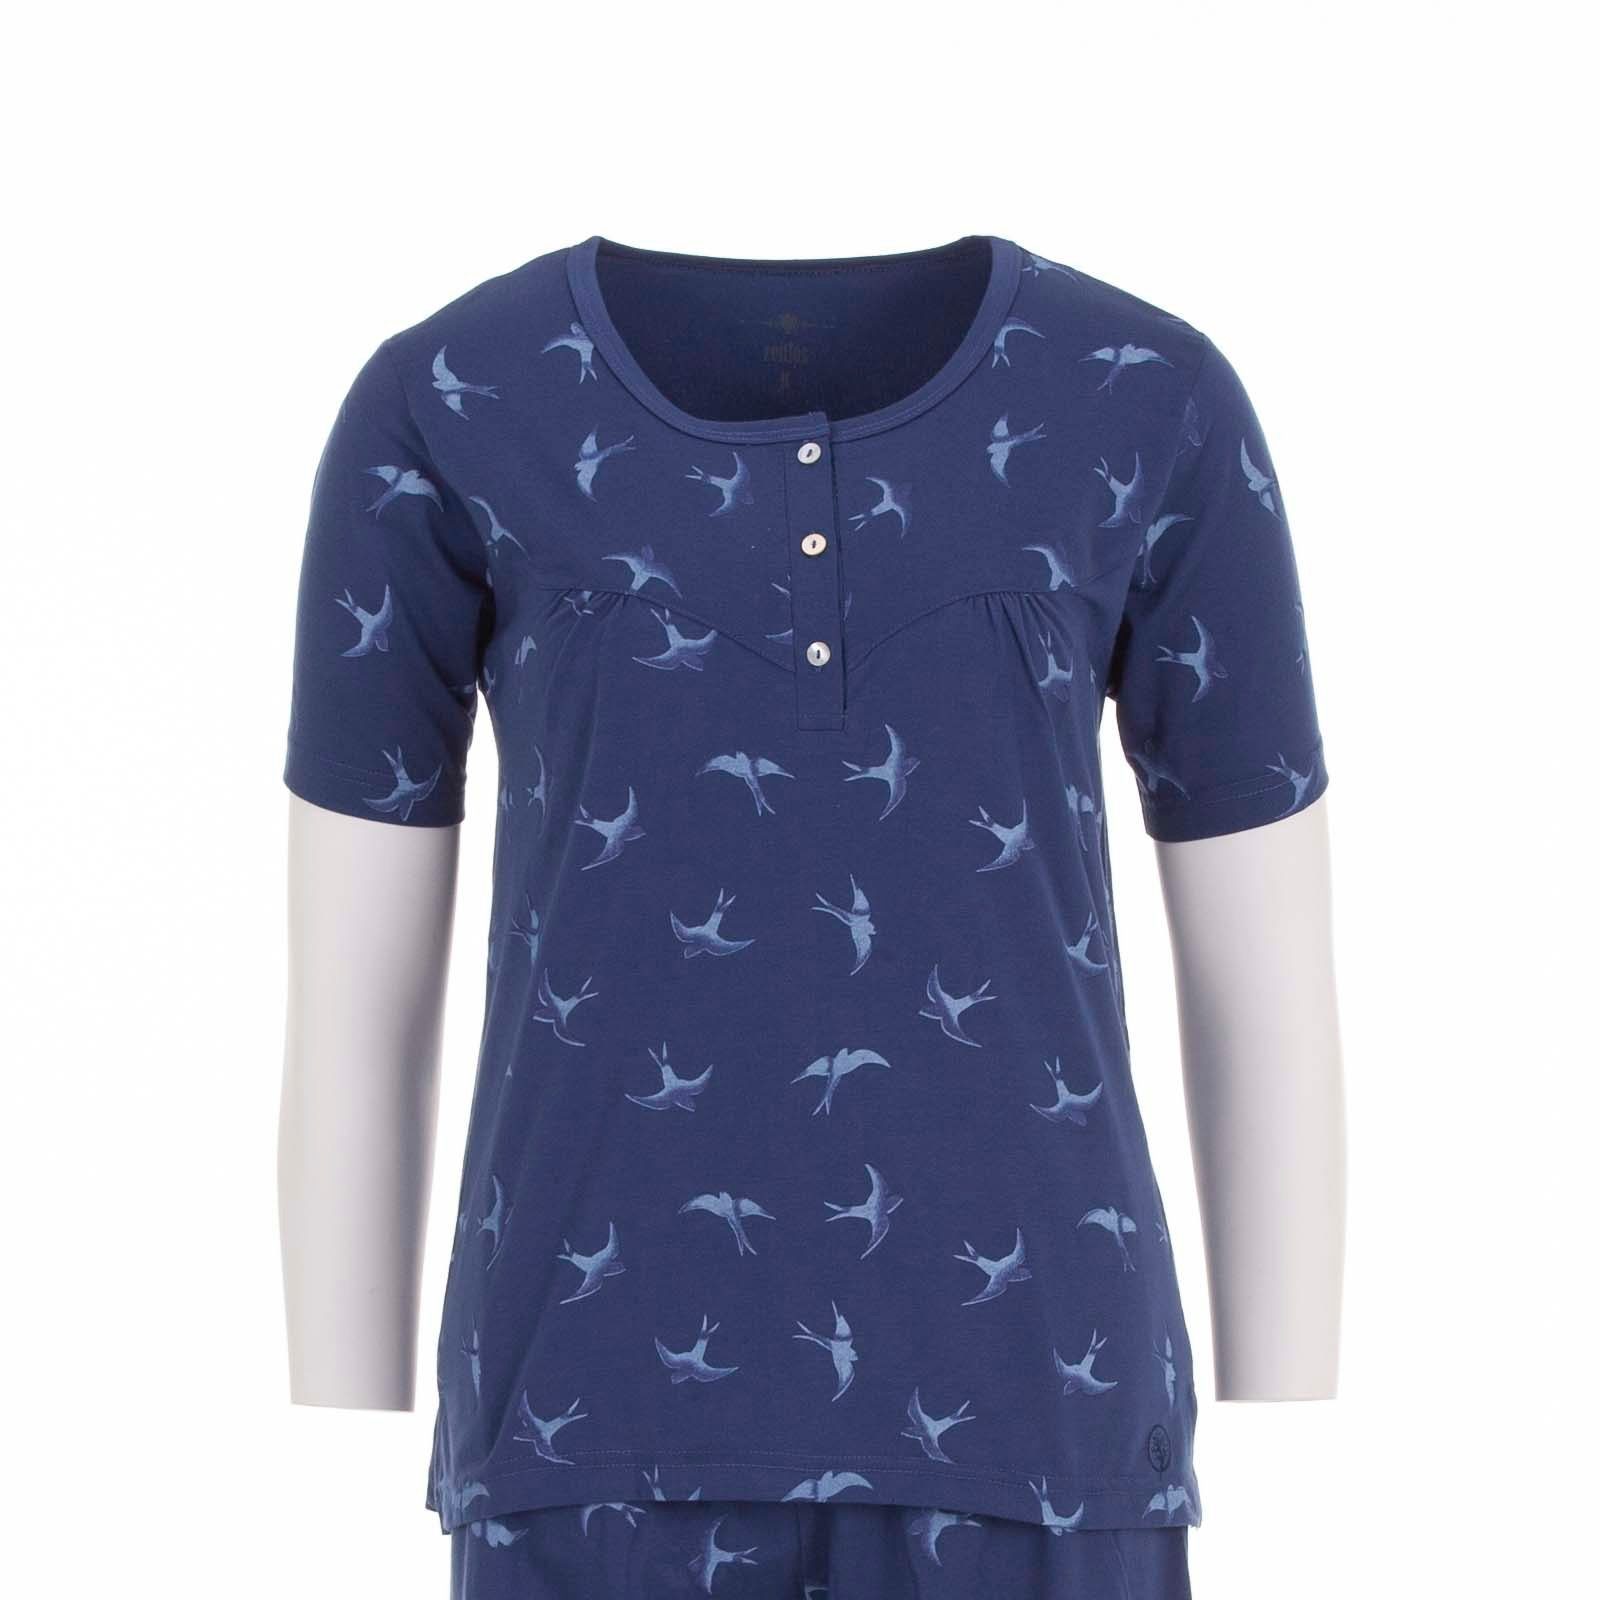 Kurzarm Schlafanzug Pyjama Set zeitlos blau Schwalbe -